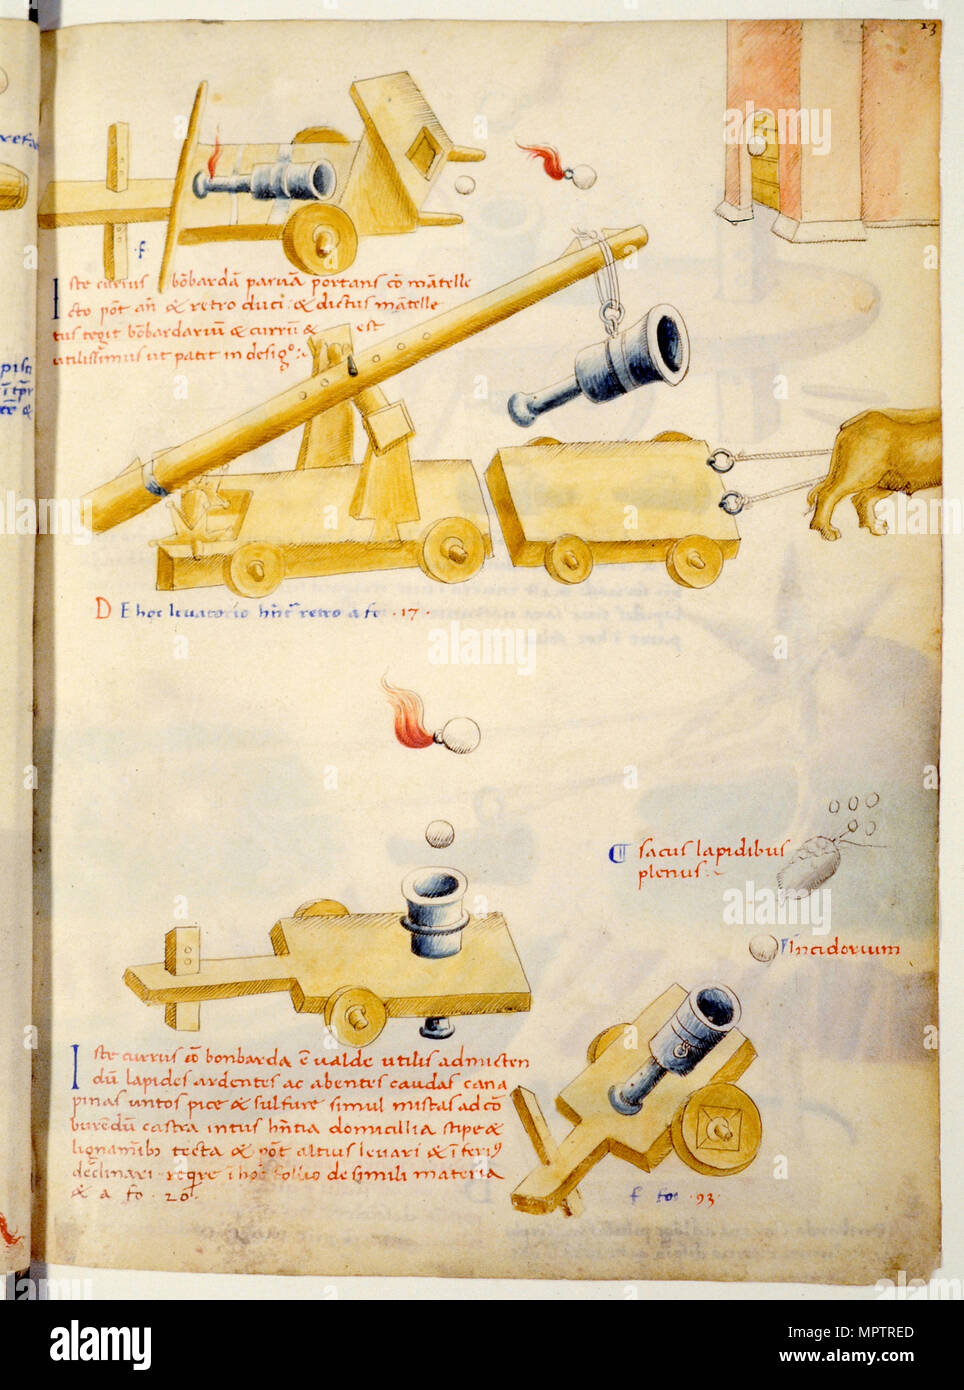 A firearm. Illustration from De rebus militaribus, De machinis by Mariano Taccola. Stock Photo